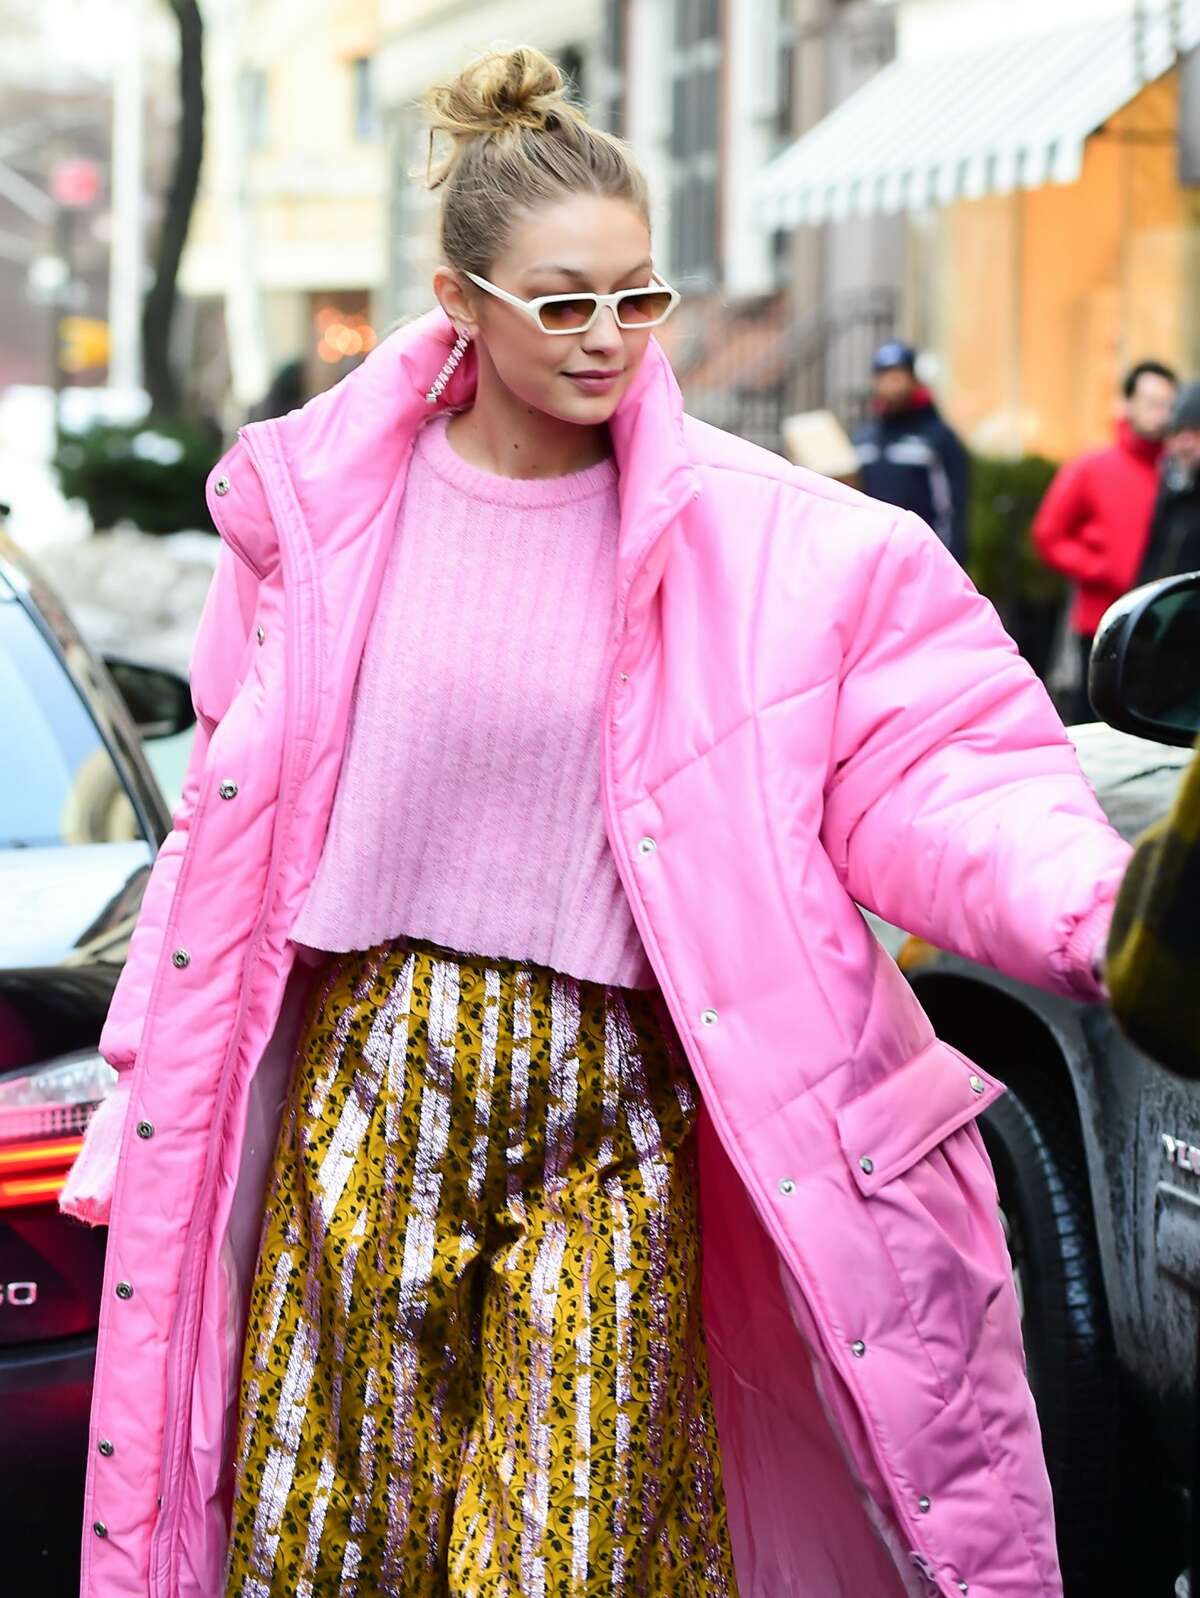 Model Gigi Hadid is seen walking in Soho on January 9, 2018 in New York City.